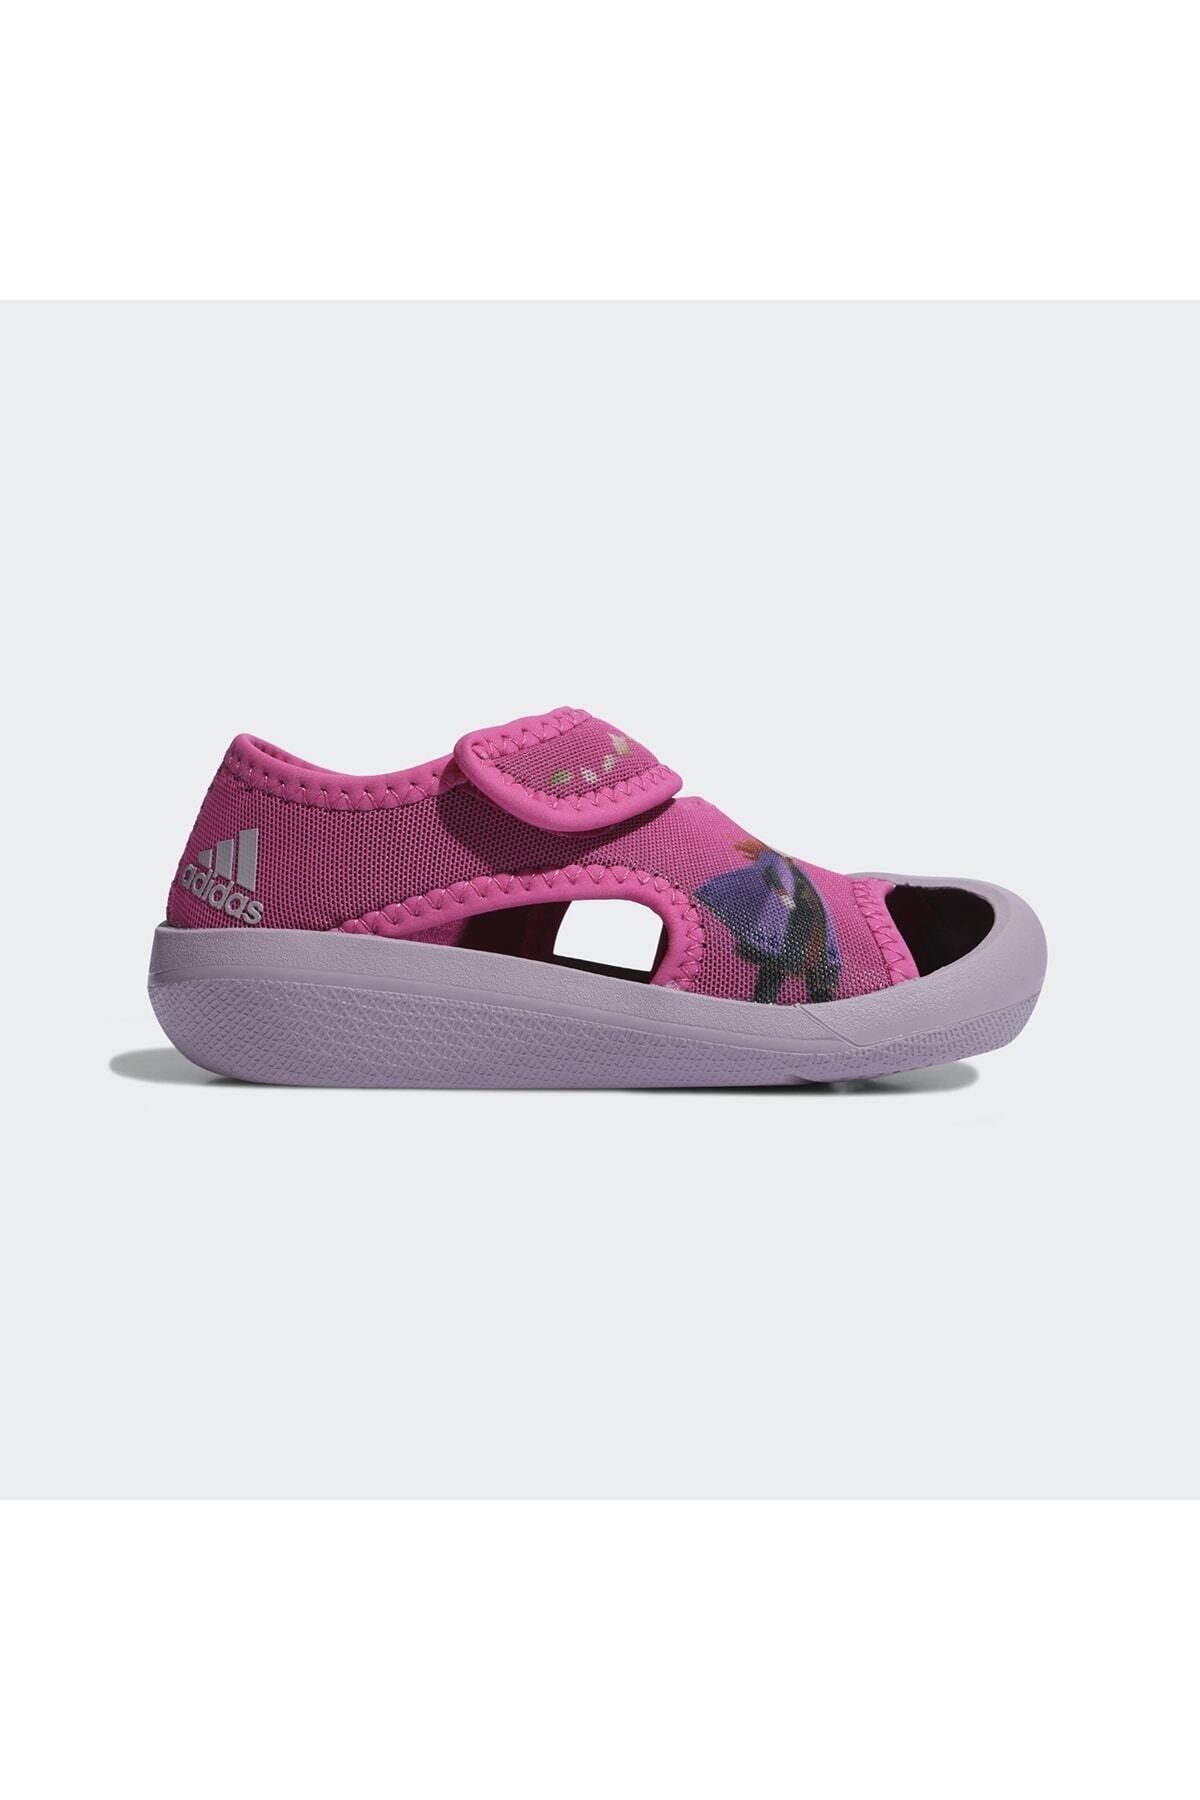 adidas ALTAVENTURE I Fuşya Kız Çocuk Sandalet 101118029